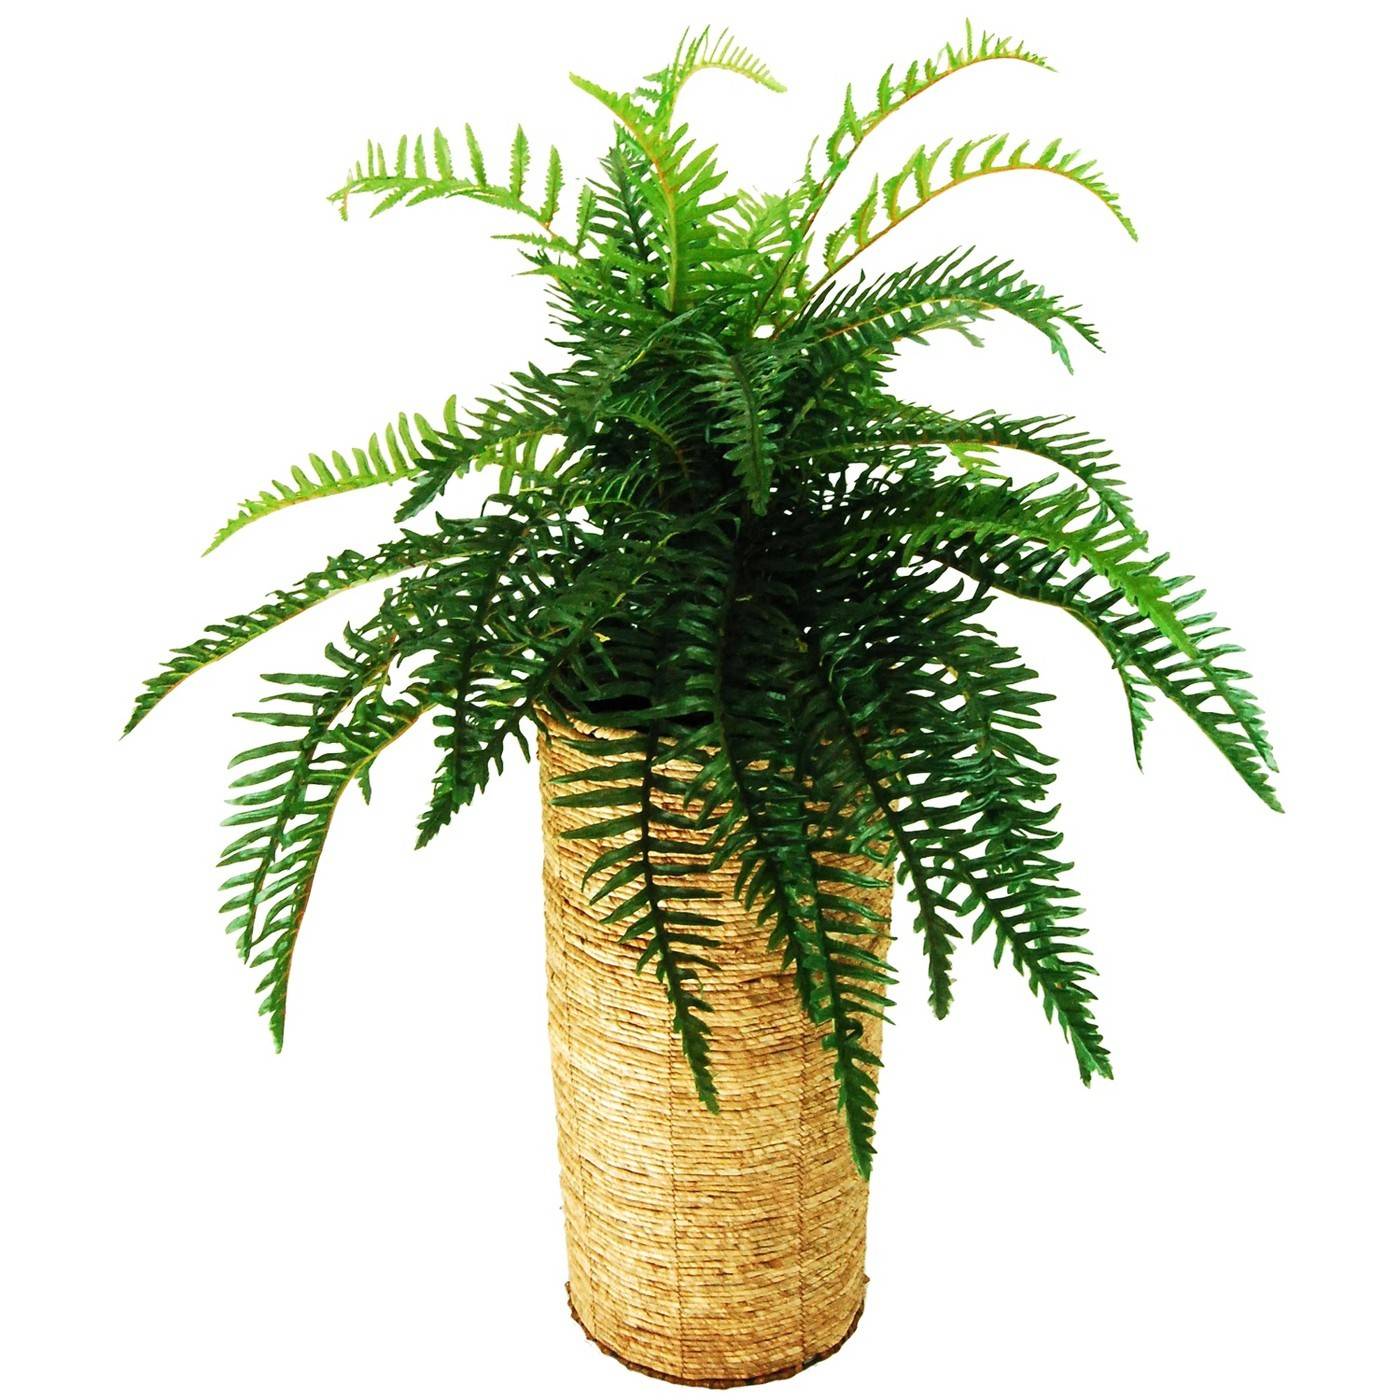 A fern is in a tall light brown pot.